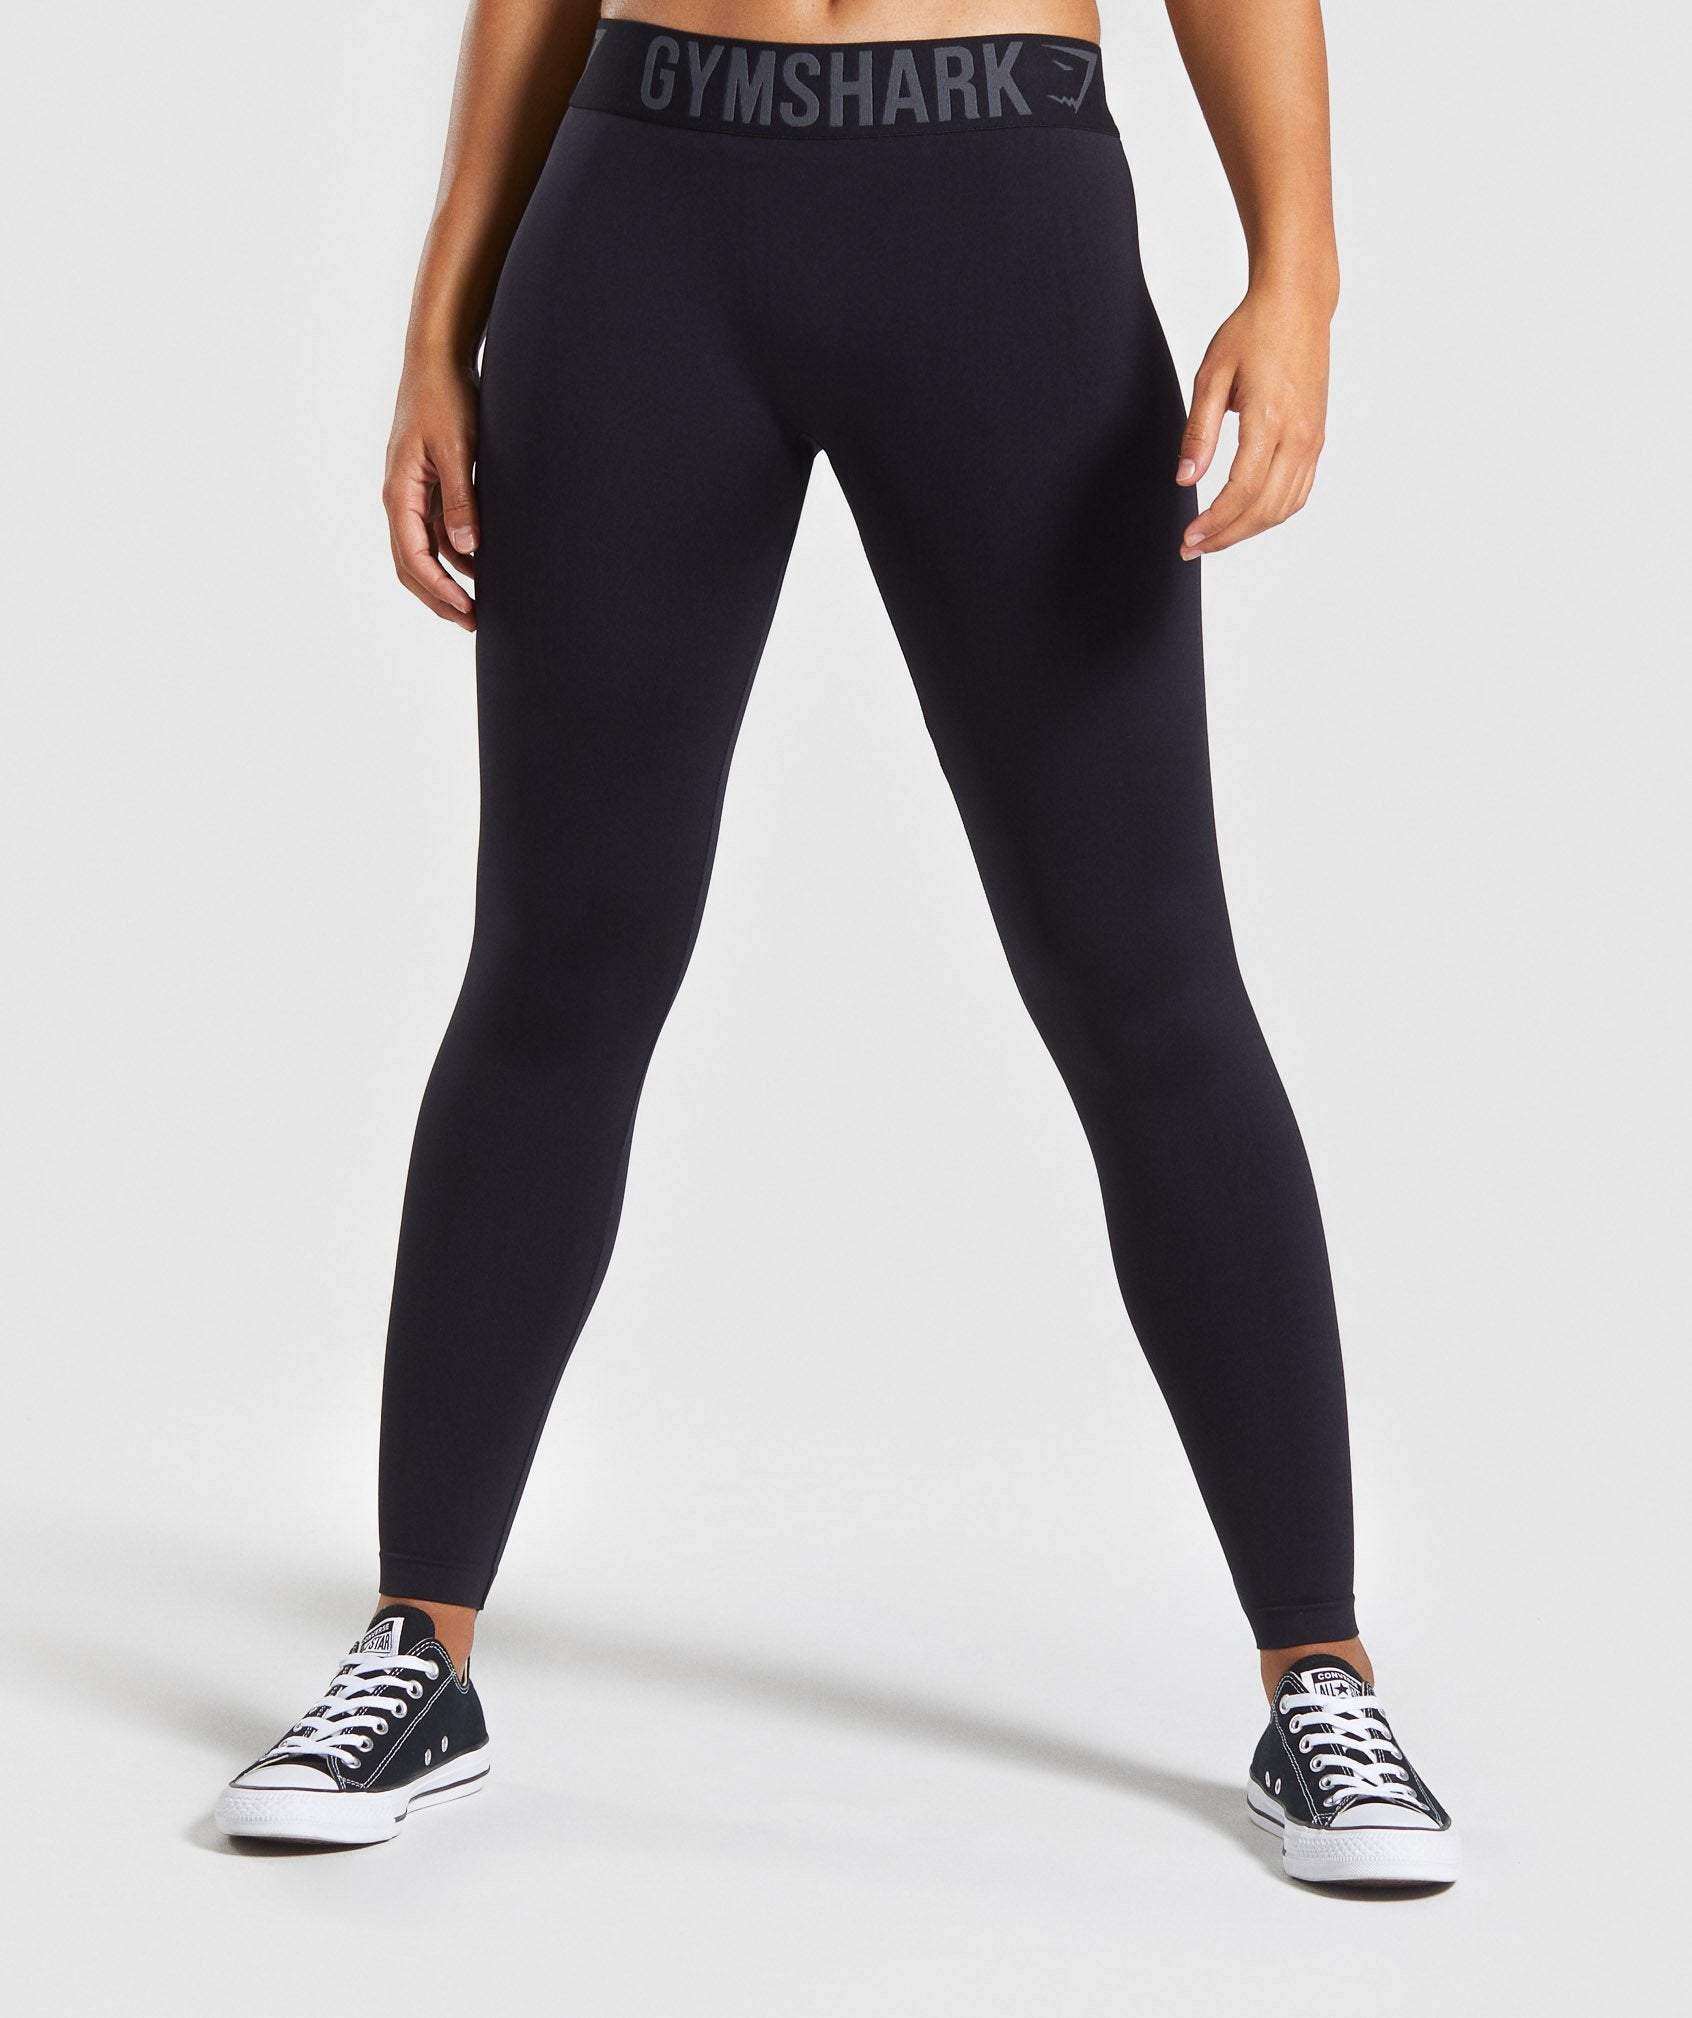 Gymshark Black Activewear Compression Leggings Woman's Size S - beyond  exchange